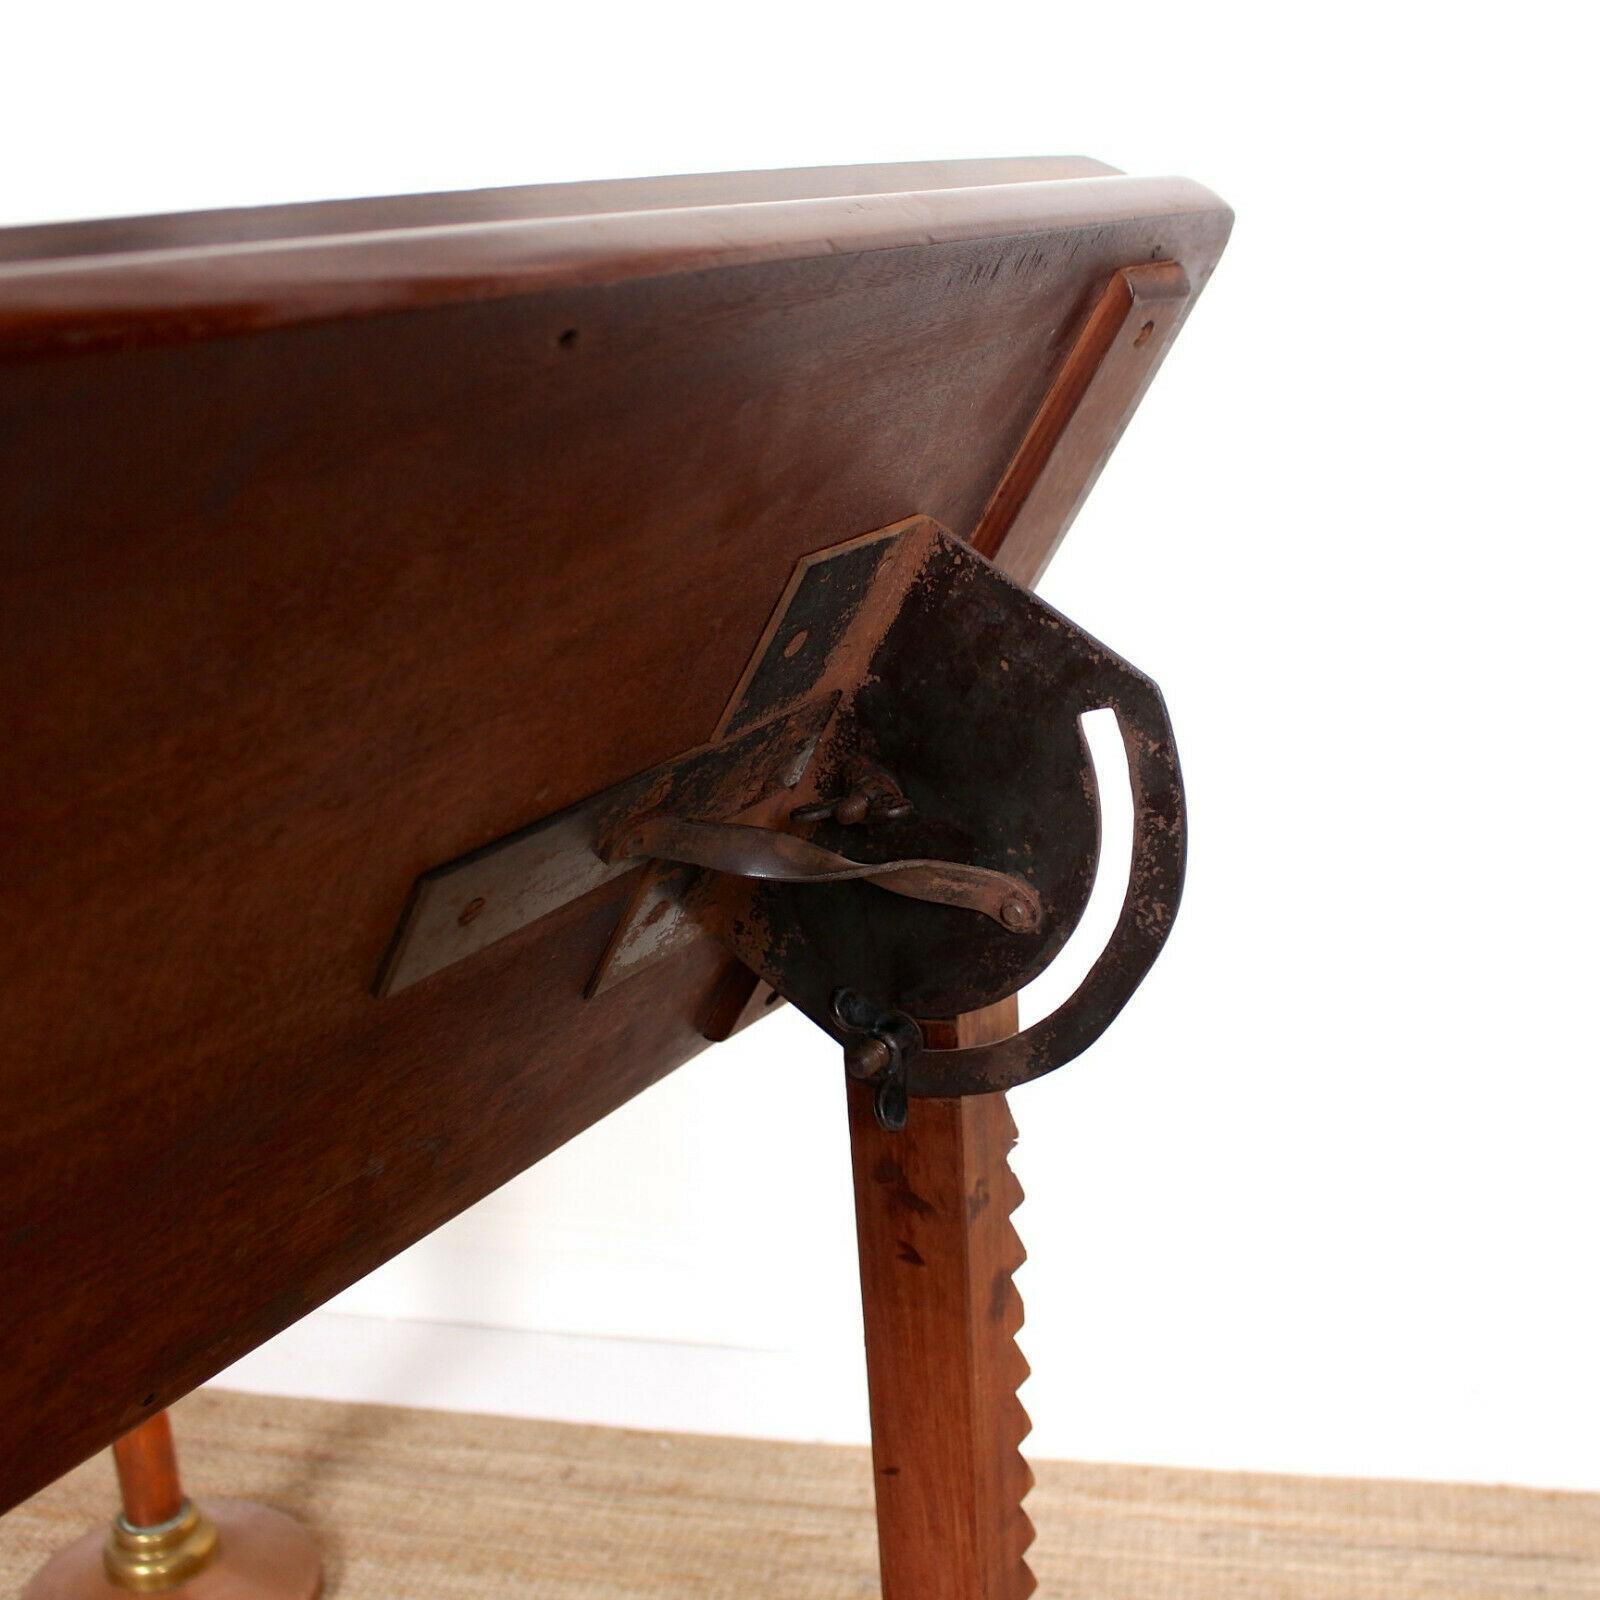 English Adjustable Writing Desk 19th Century Portable Architechts Table Mahogany 5